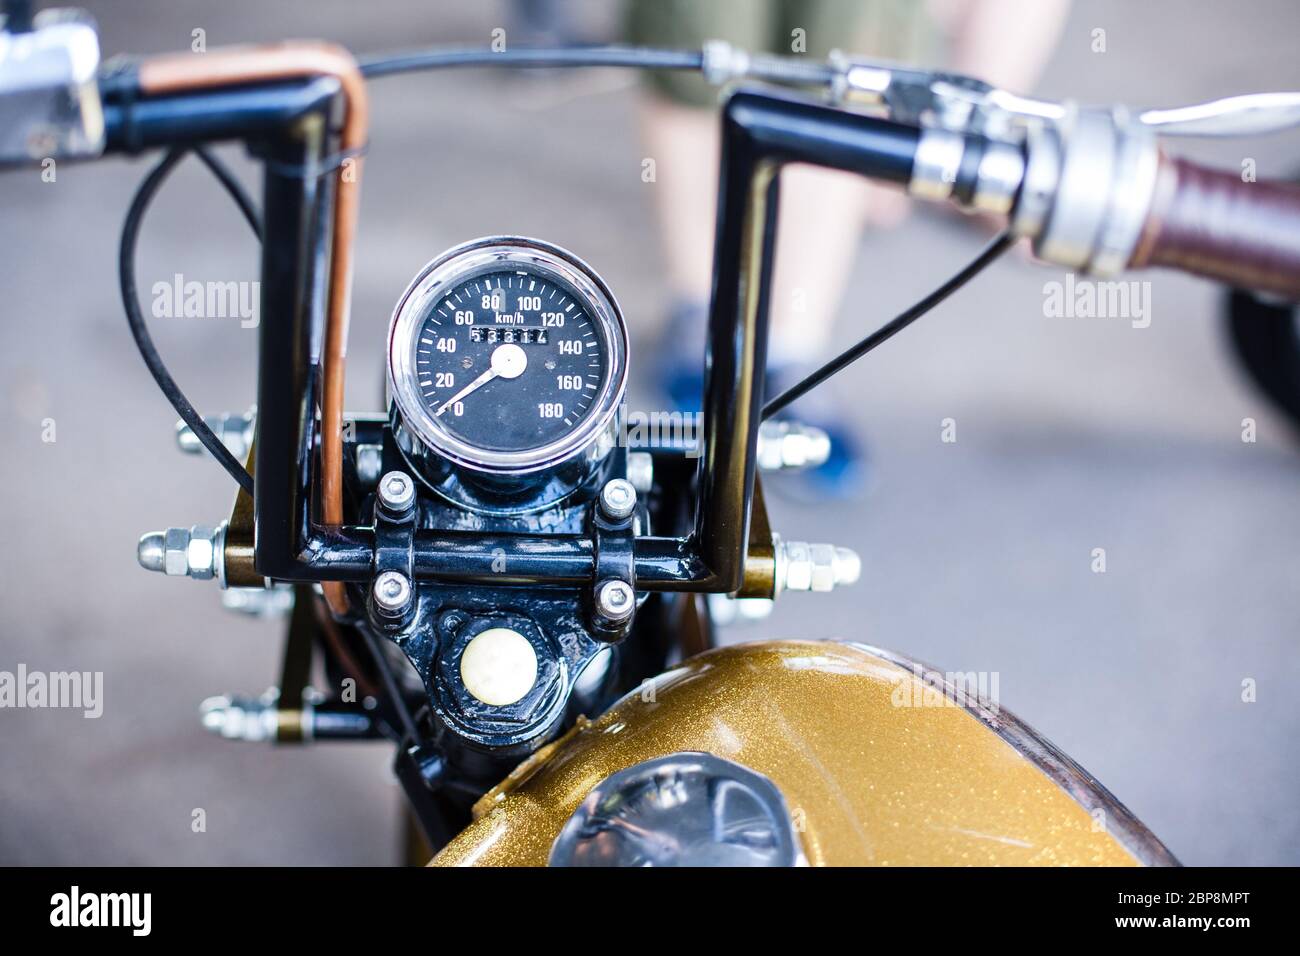 Unusual Kustom kulture fest motorcycle retro vintage style Stock Photo -  Alamy